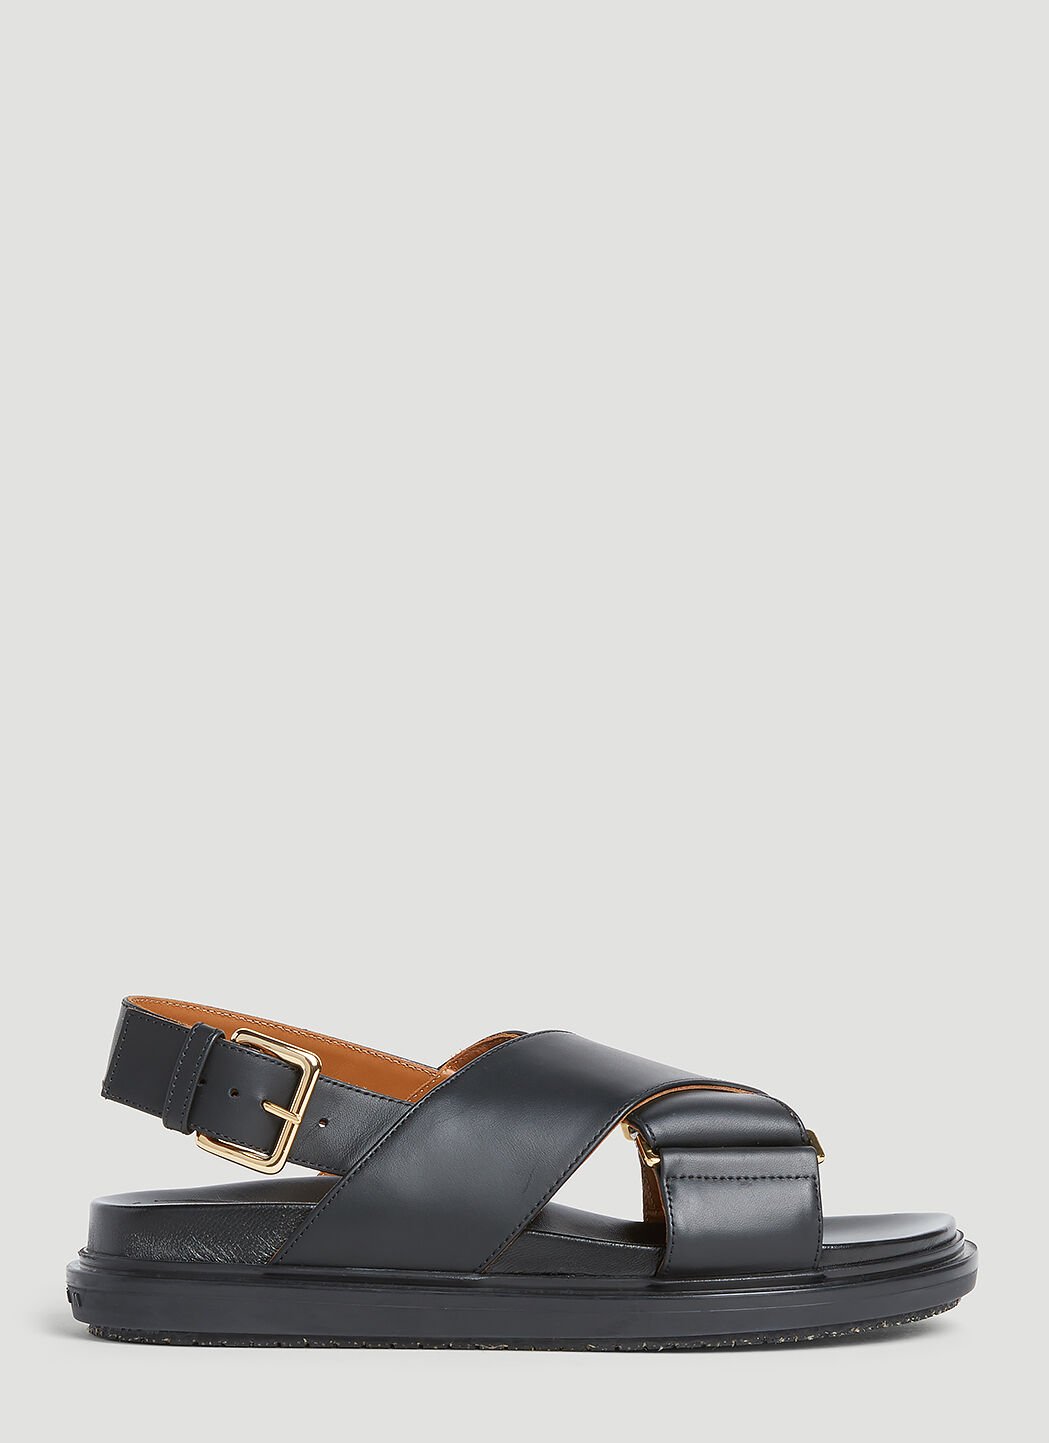 Balenciaga Fussbett Leather Sandals Black bal0252062